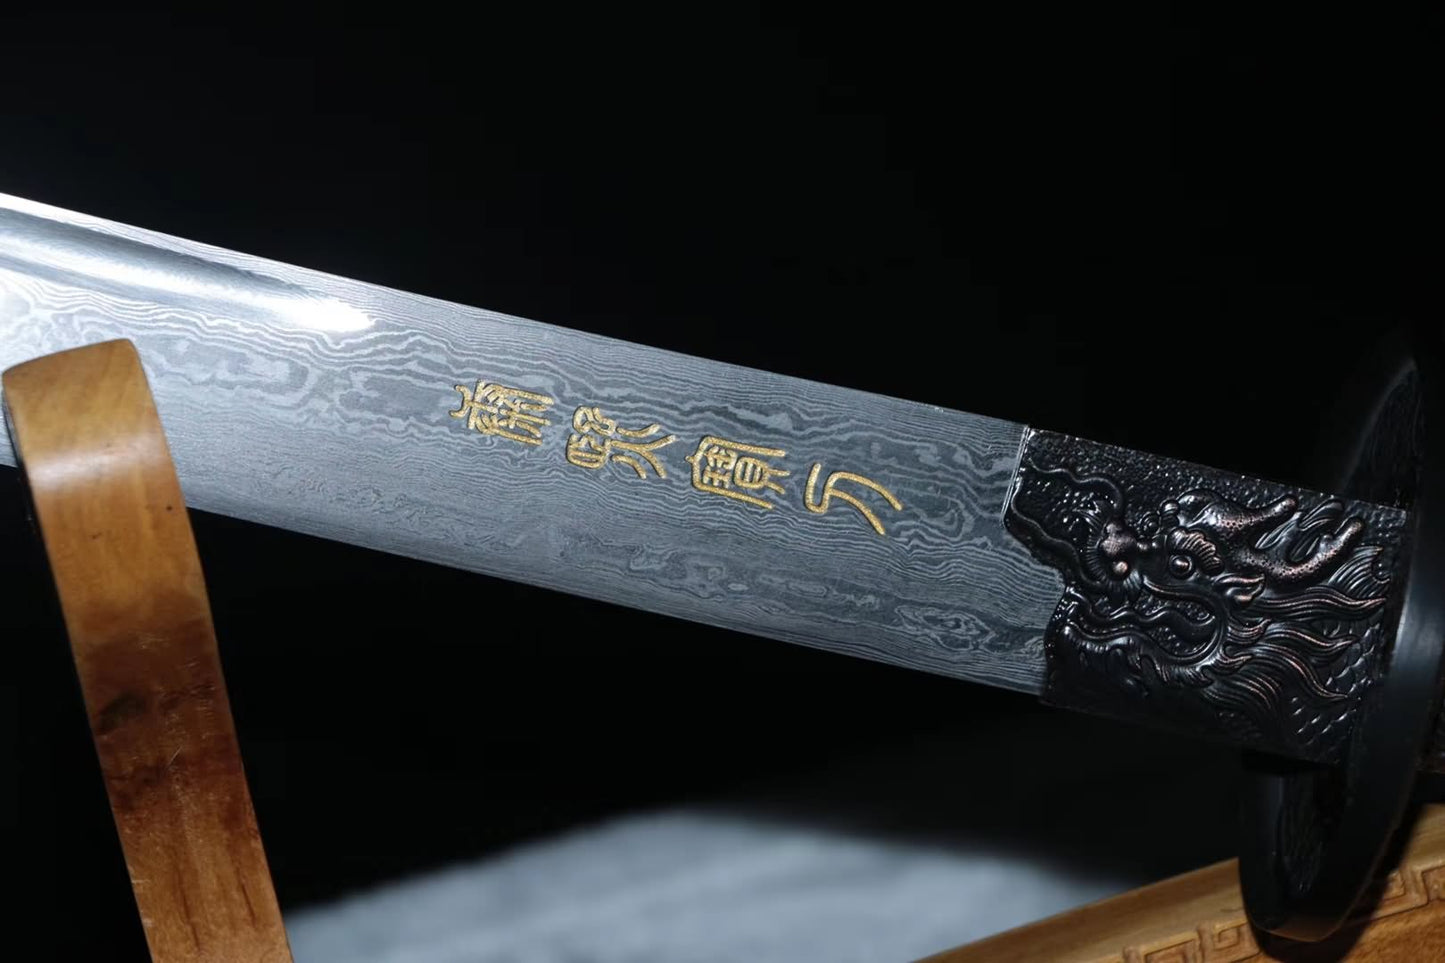 Kangxi sword,Damascus steel blade,Green skin scabbard,Alloy fittings - Chinese sword shop